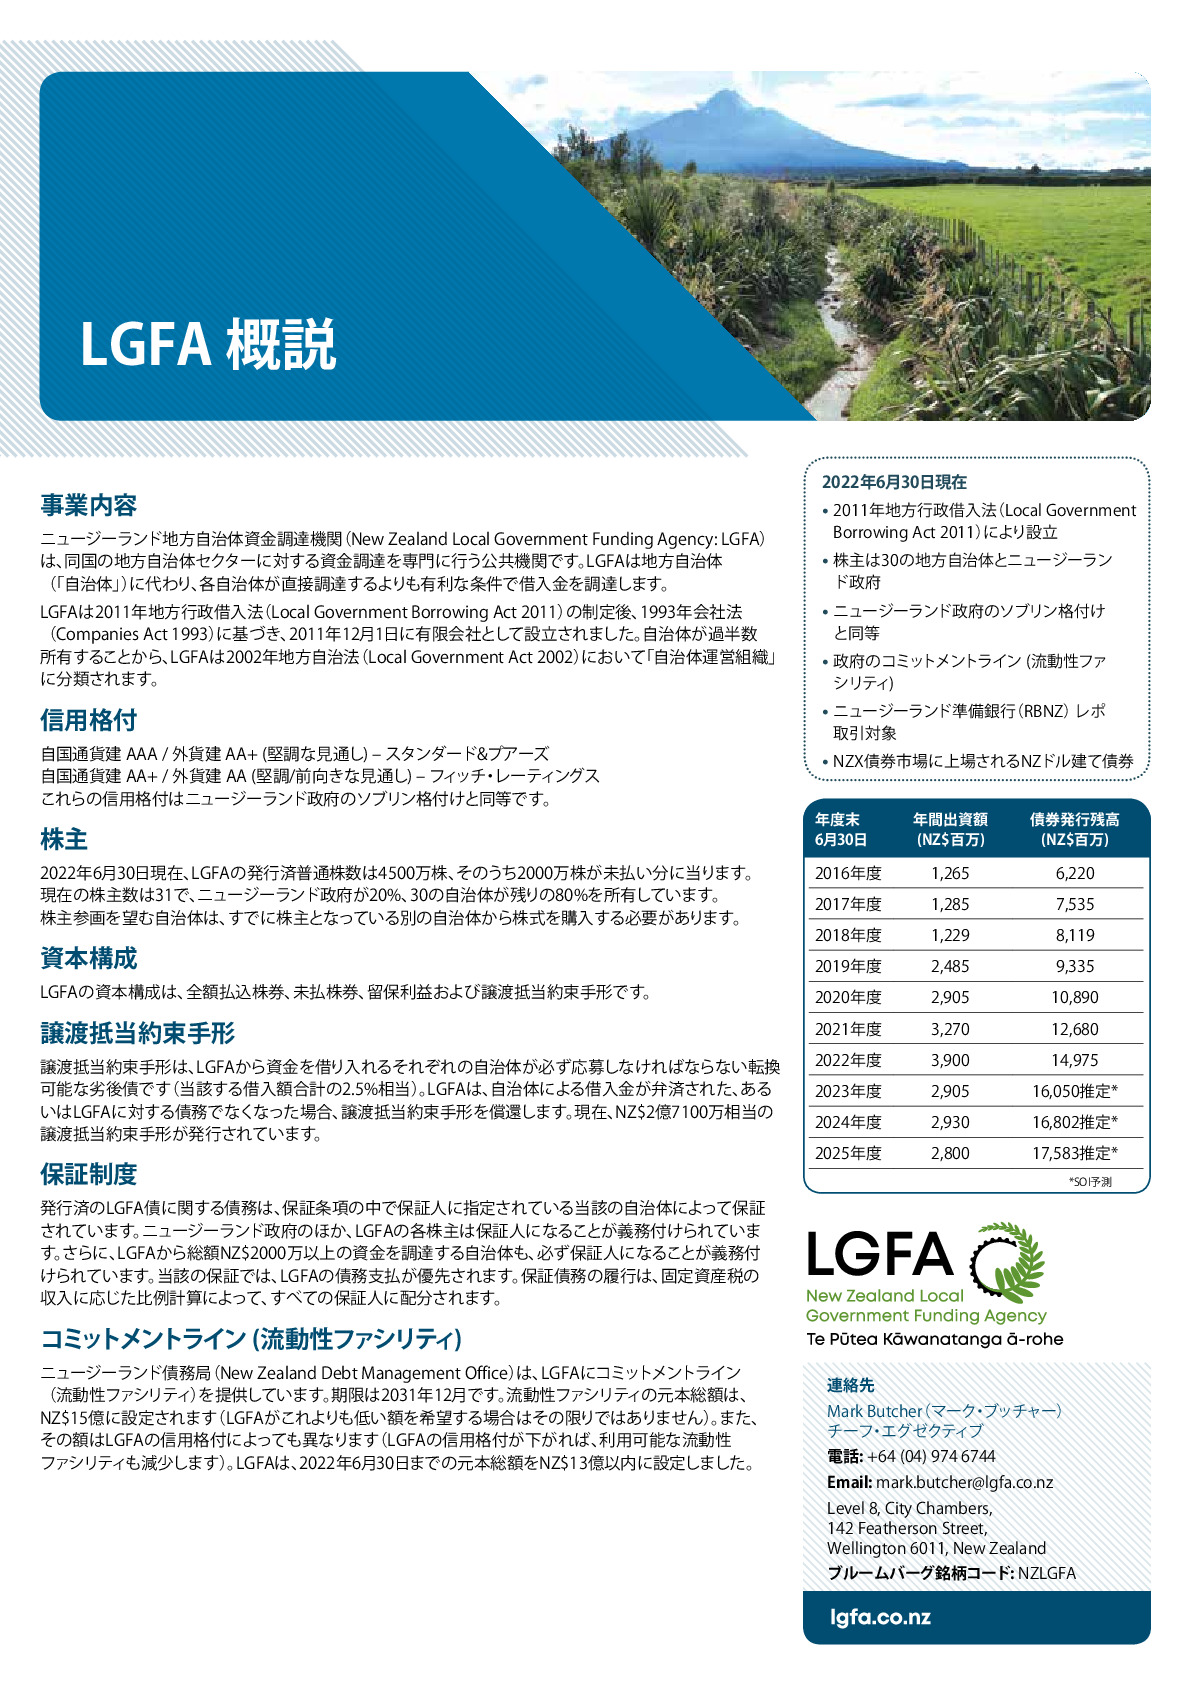 LGFA_Overview_Jun22 - Japanese